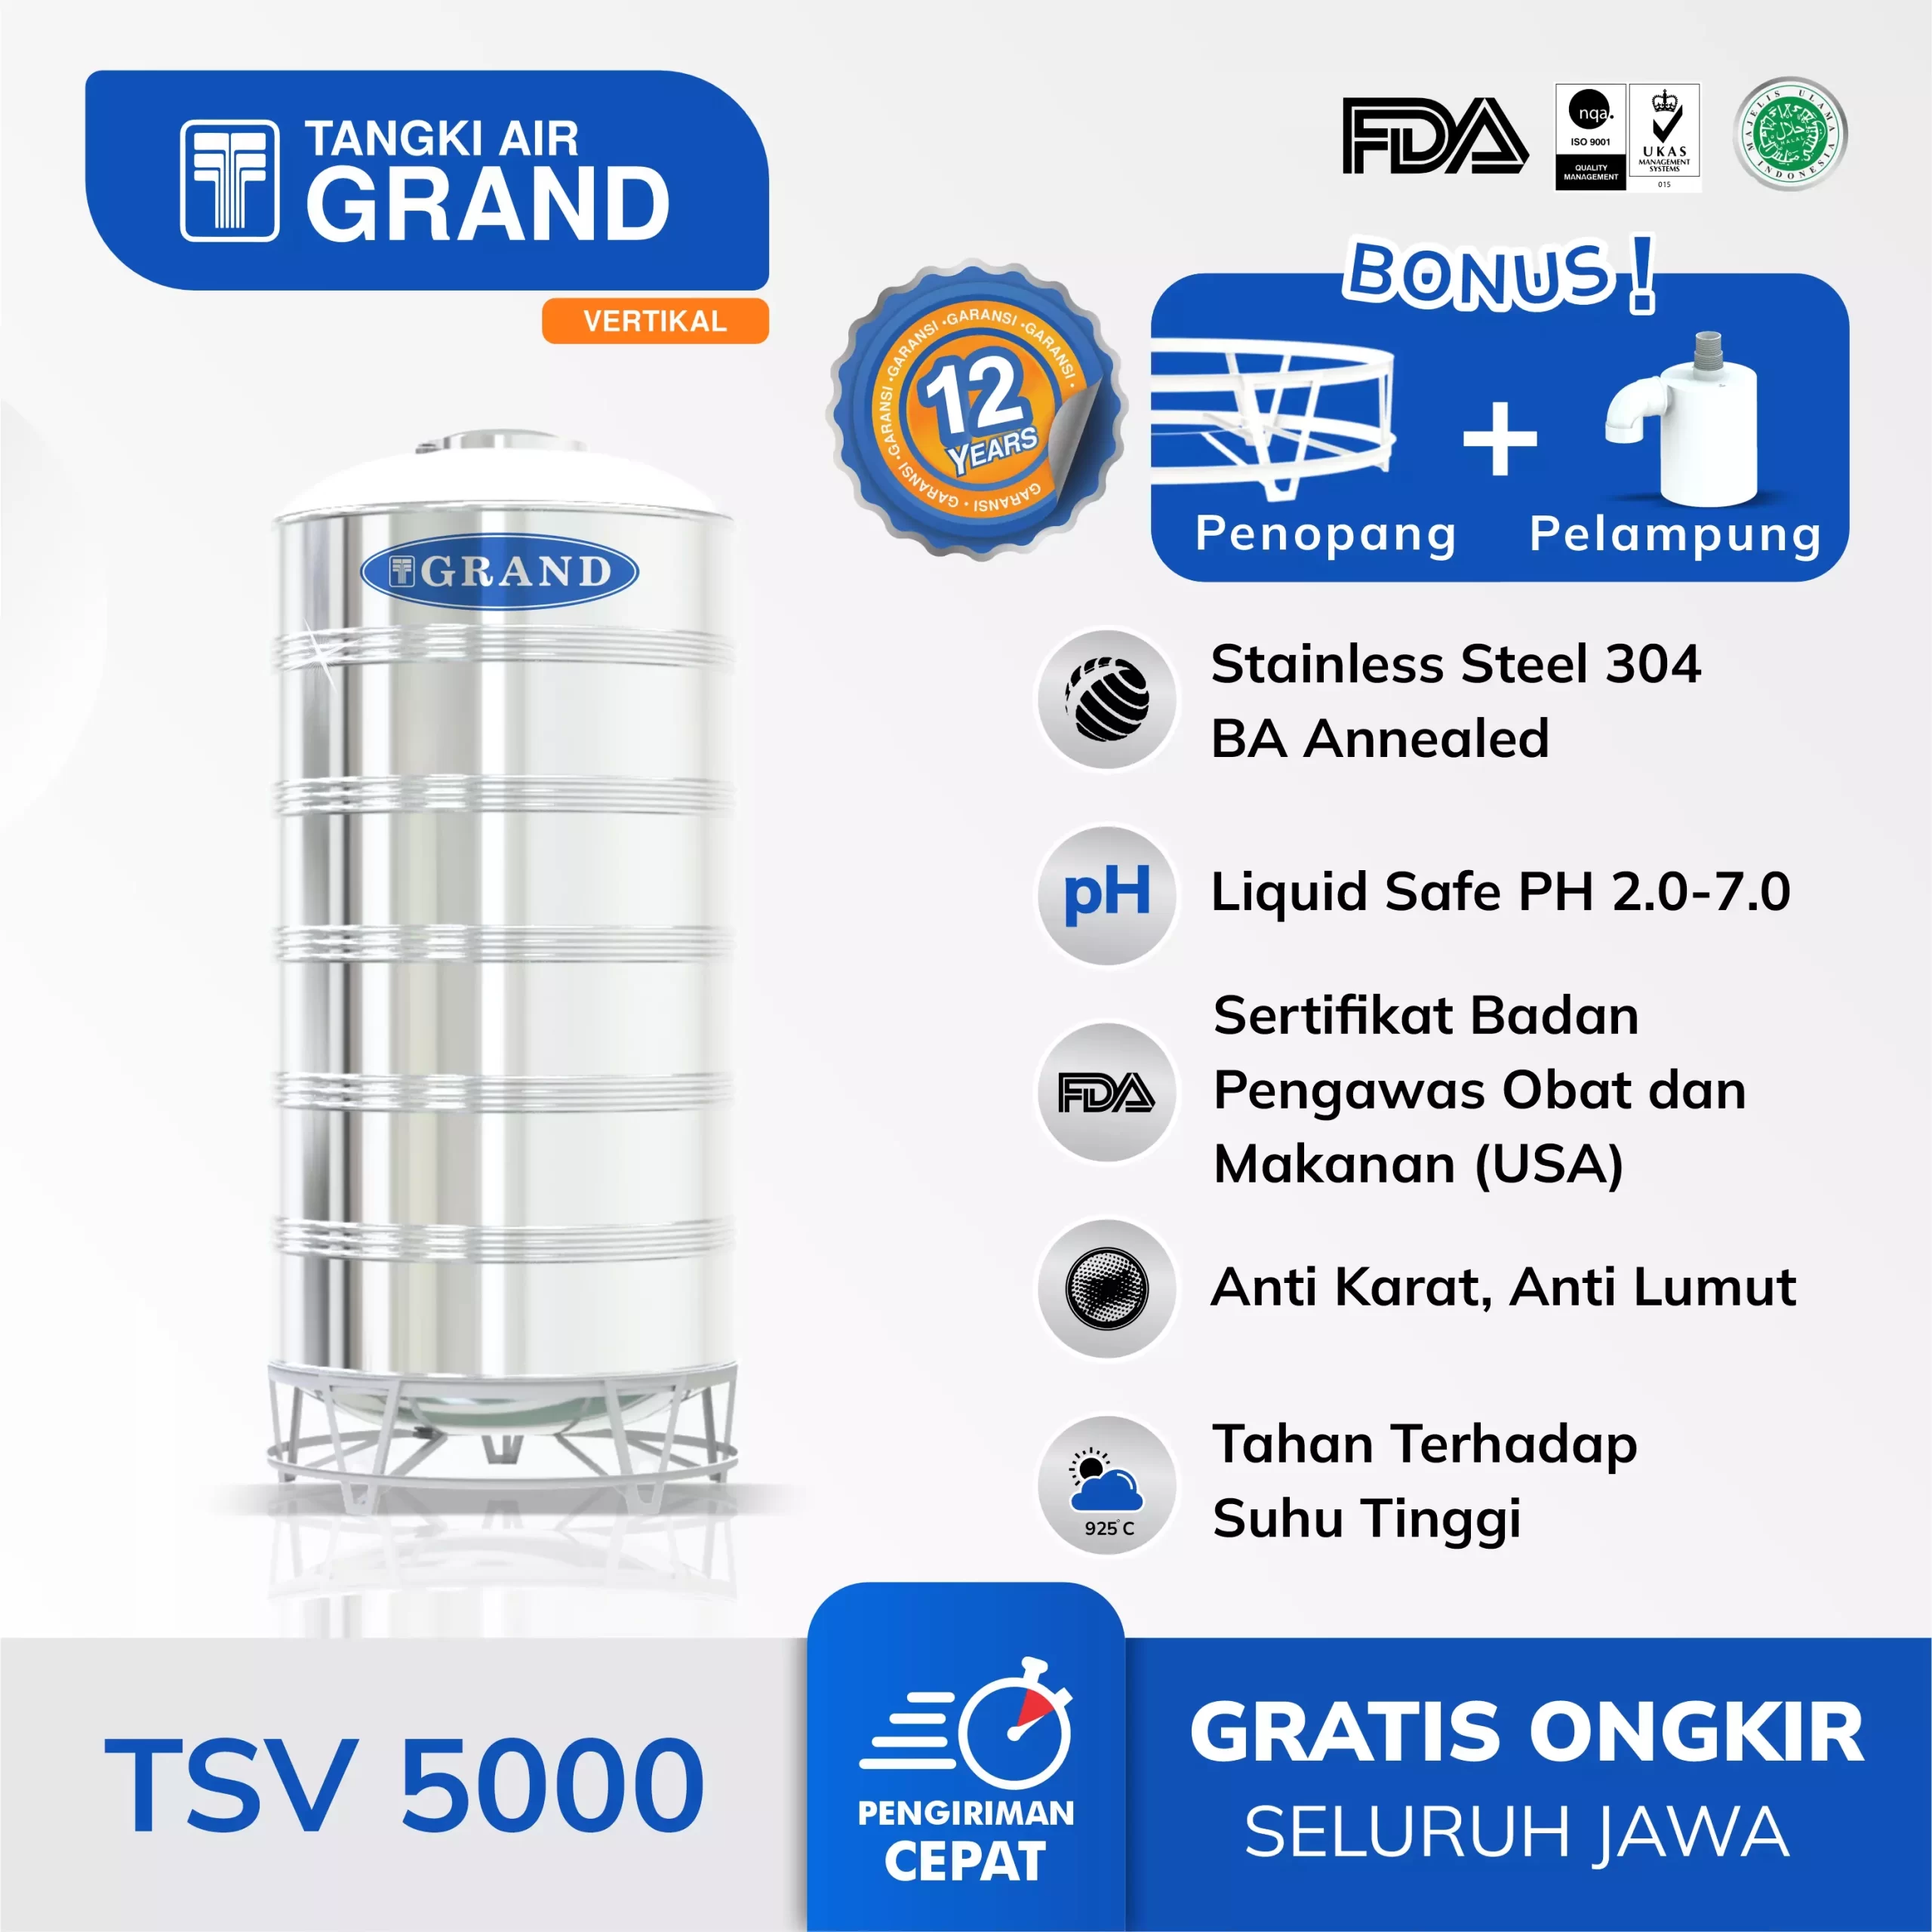 Tandon Tangki Toren Air Stainless Steel Vertical Grand